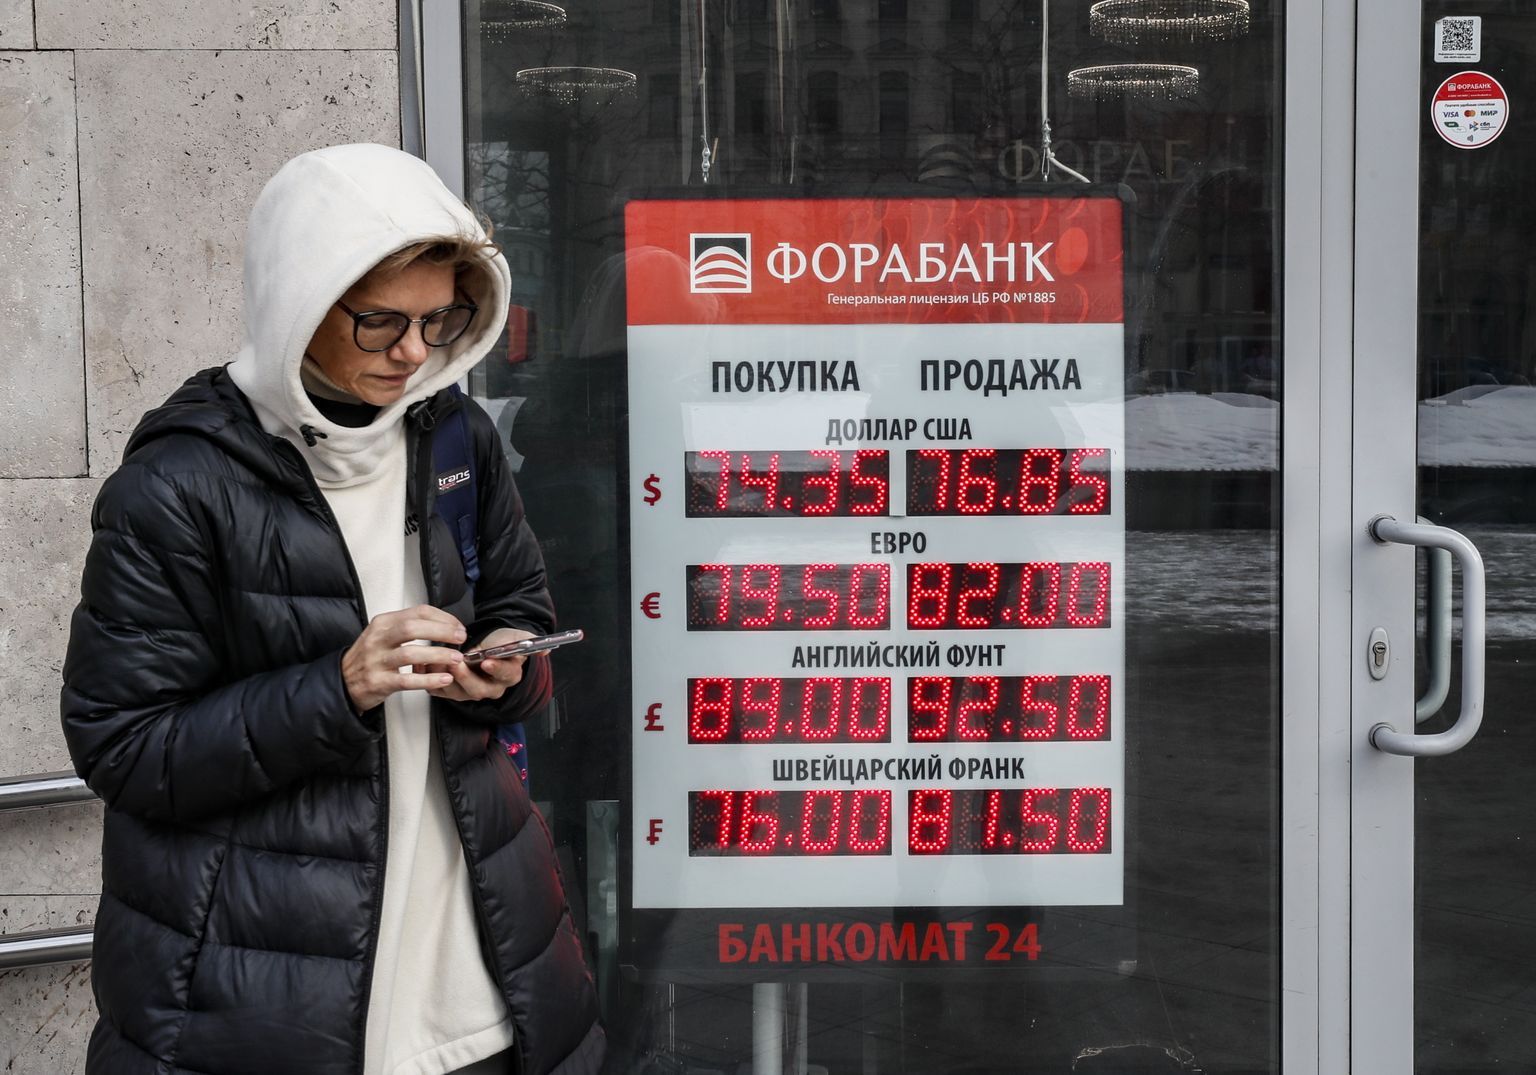 Valuutavahetuspunkt Moskvas.   EPA/YURI KOCHETKOV